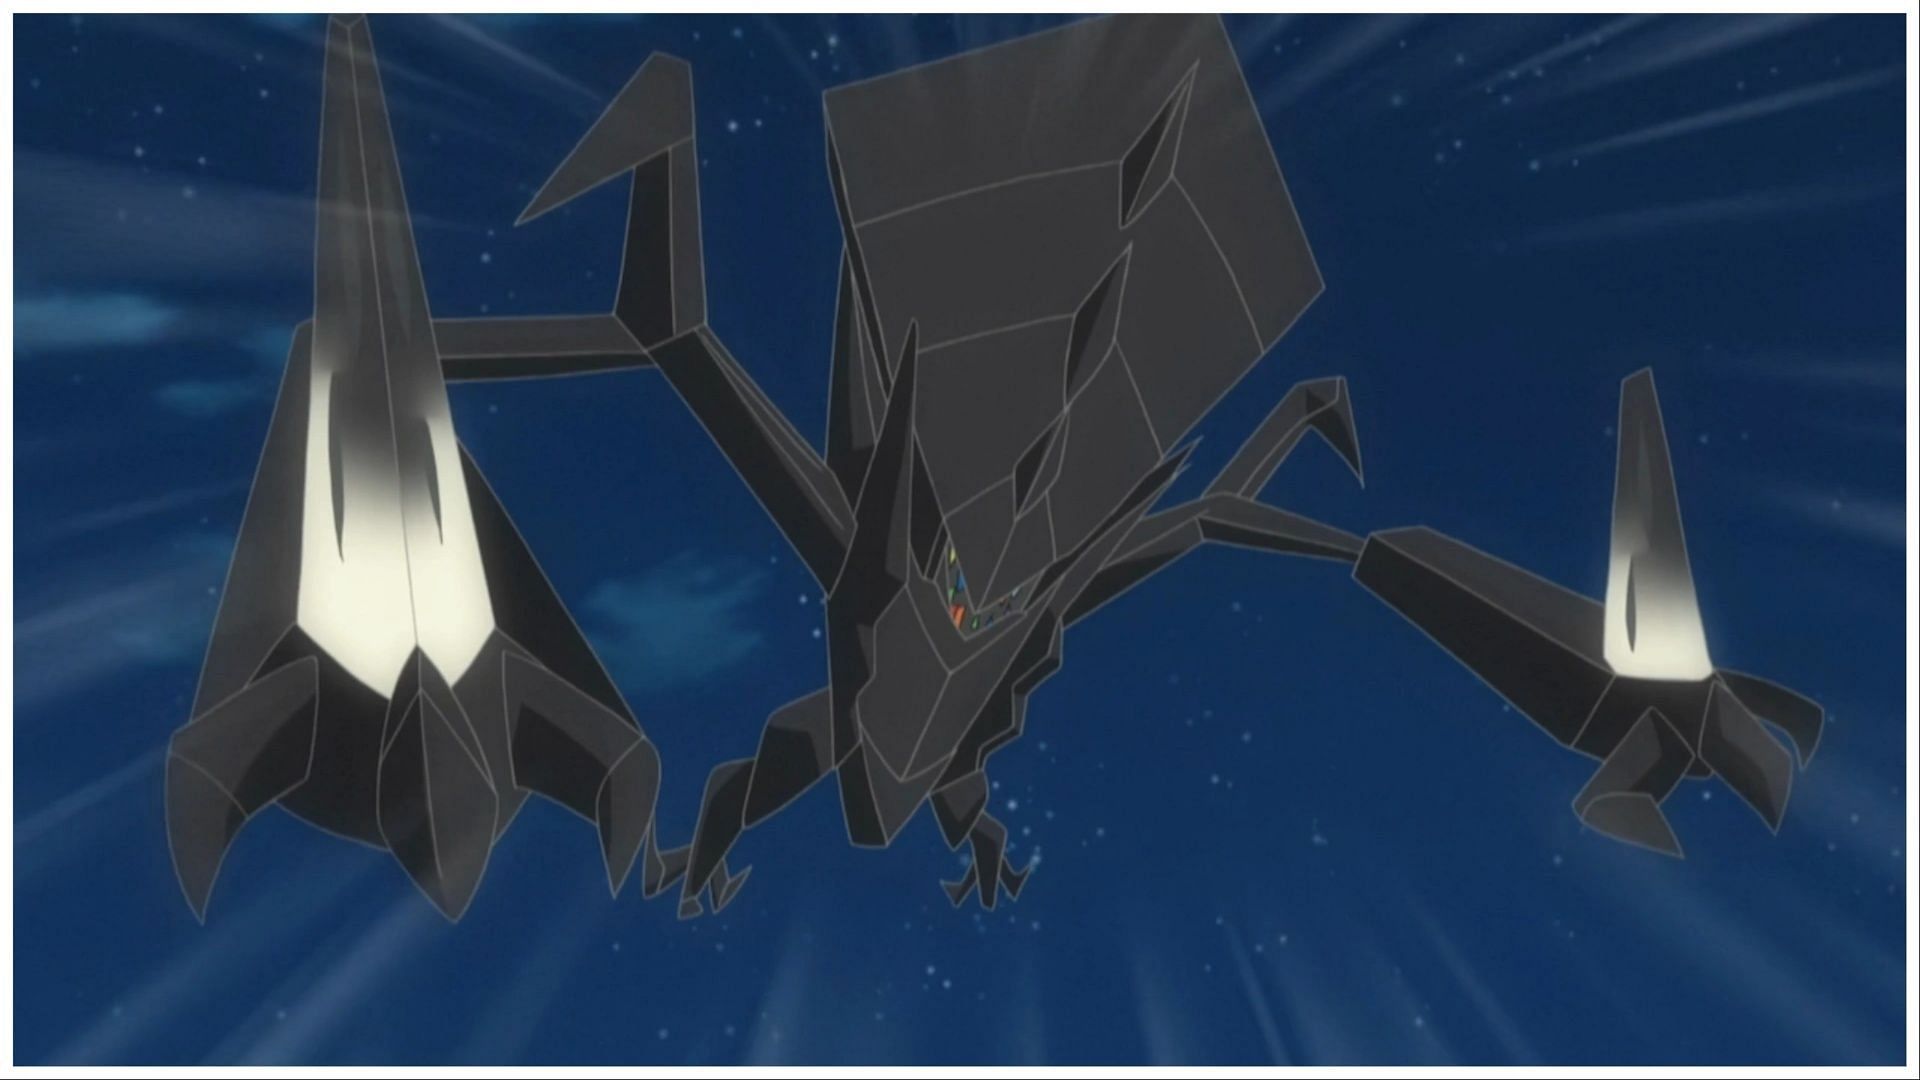 Necrozma as seen in the Pokemon anime (Image via The Pokemon Company)